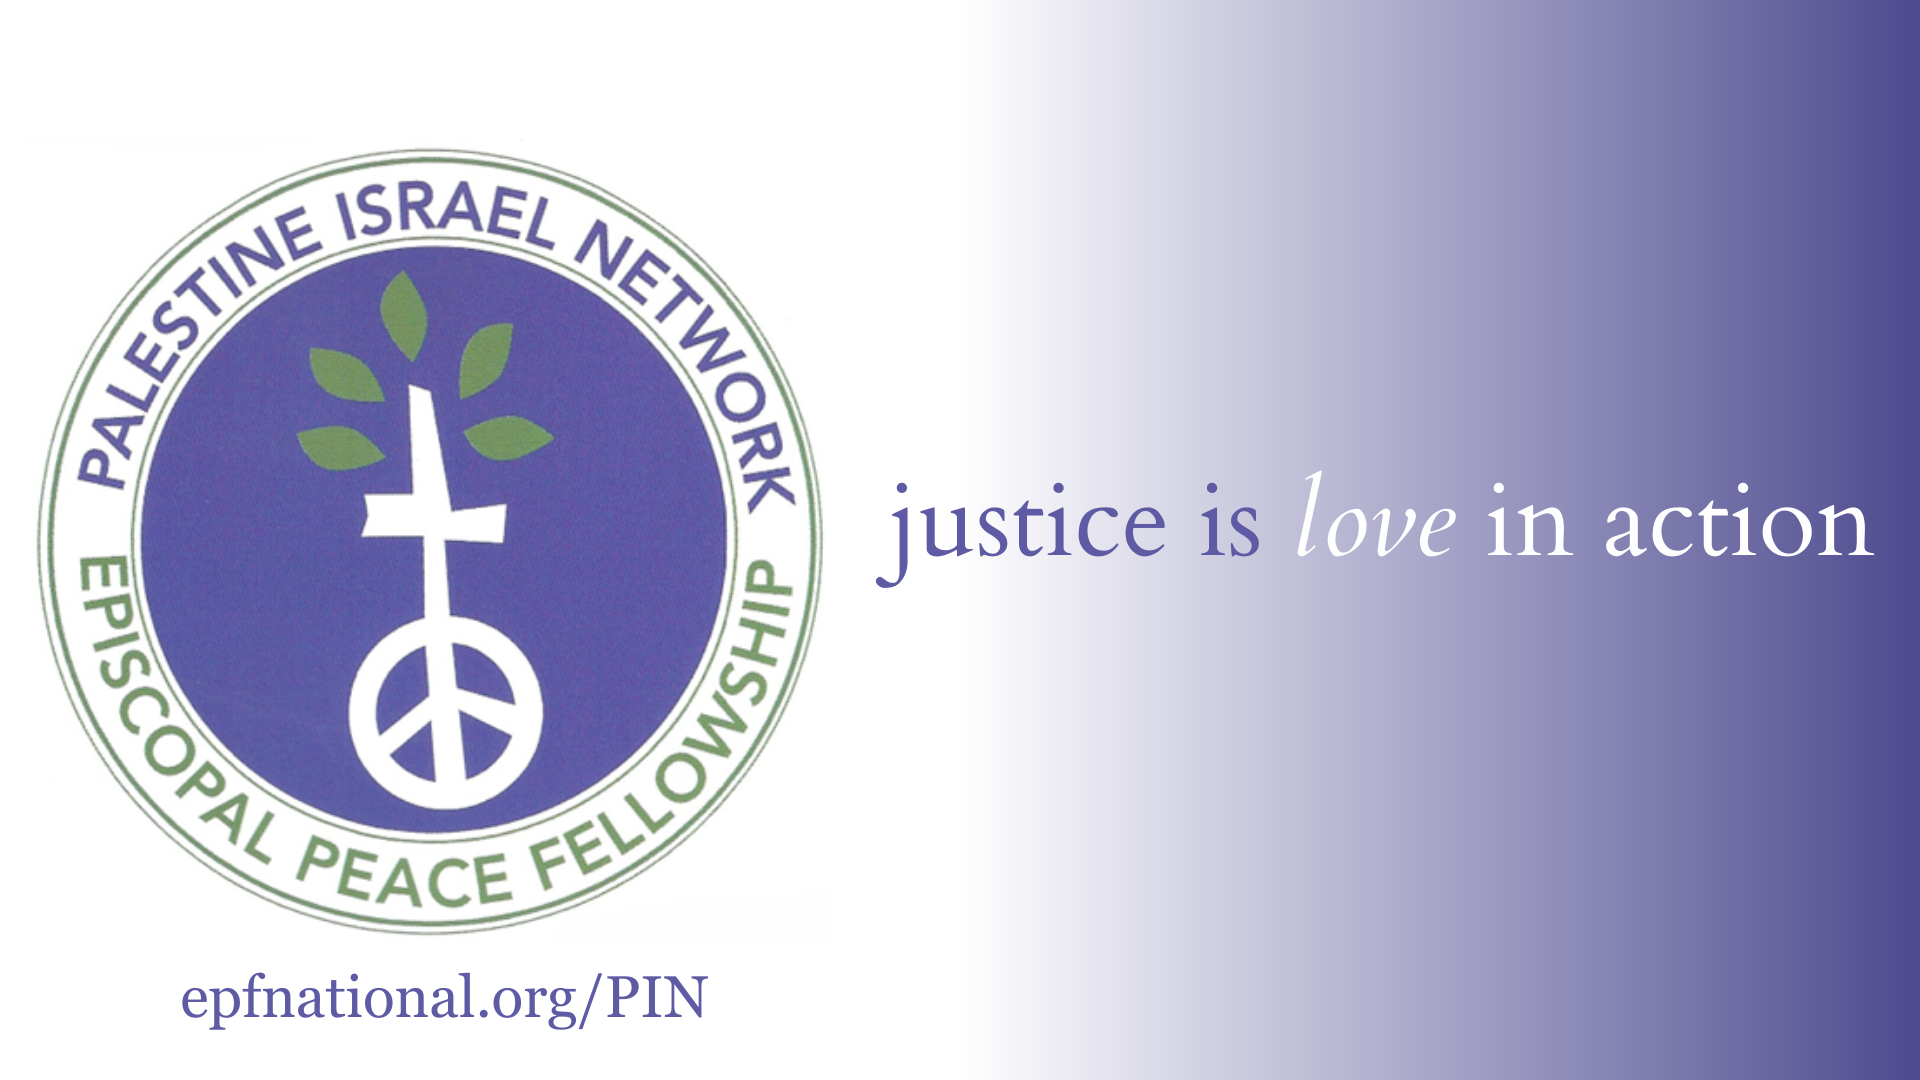 Palestine Israel Network - Episcopal Peace Fellowship